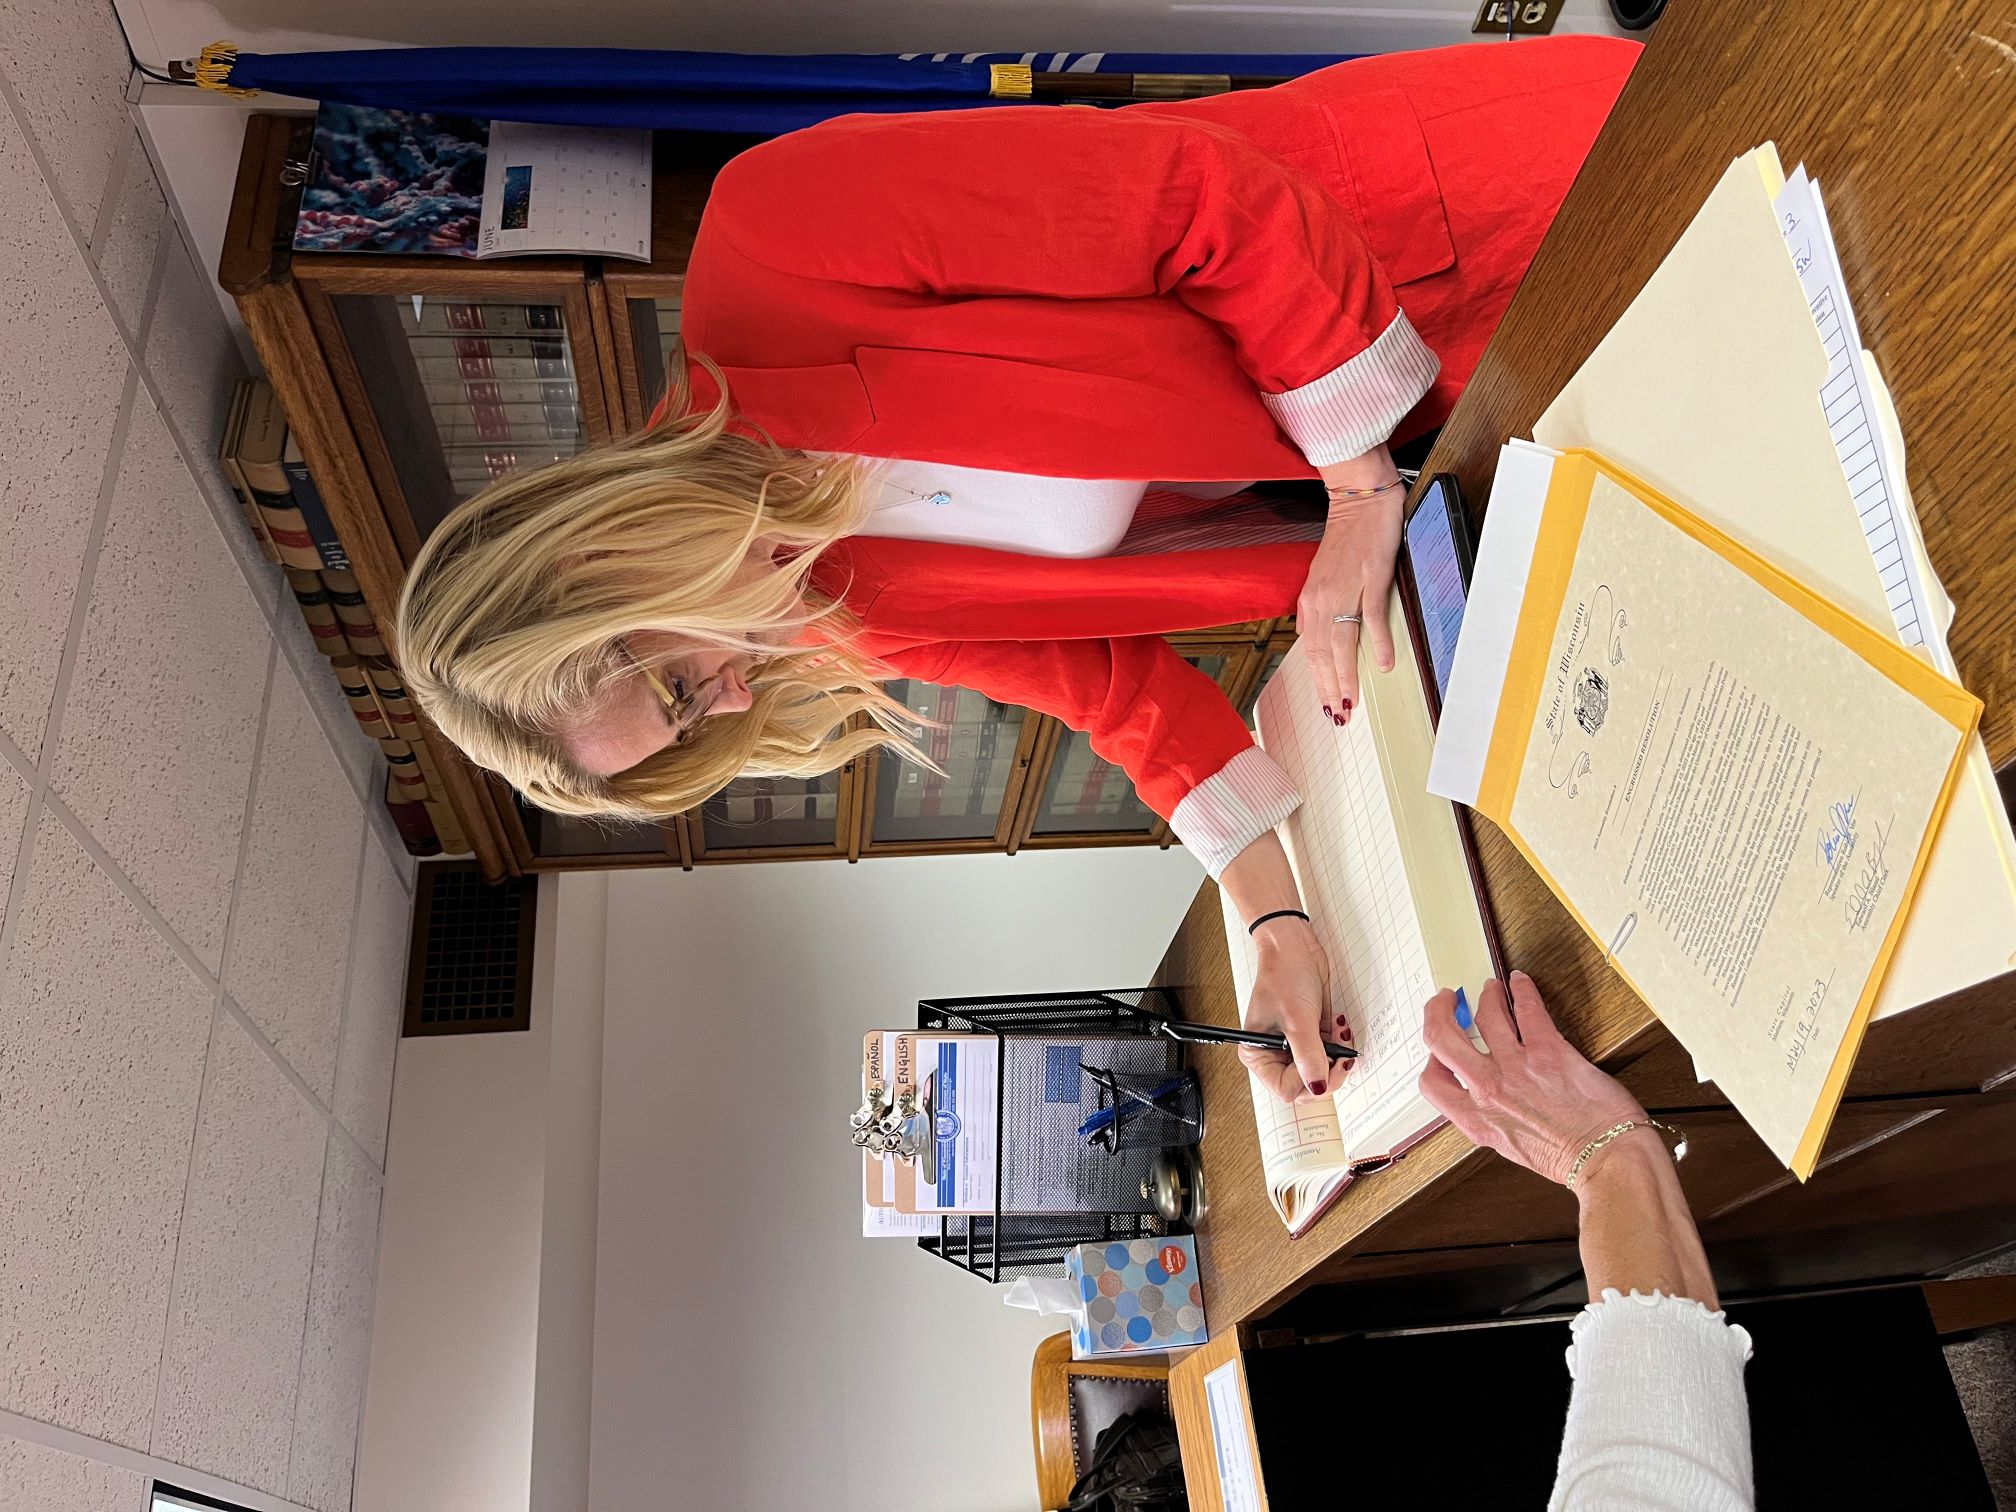 Sec. Godlewski signing the book to confirm filing of legislature documents